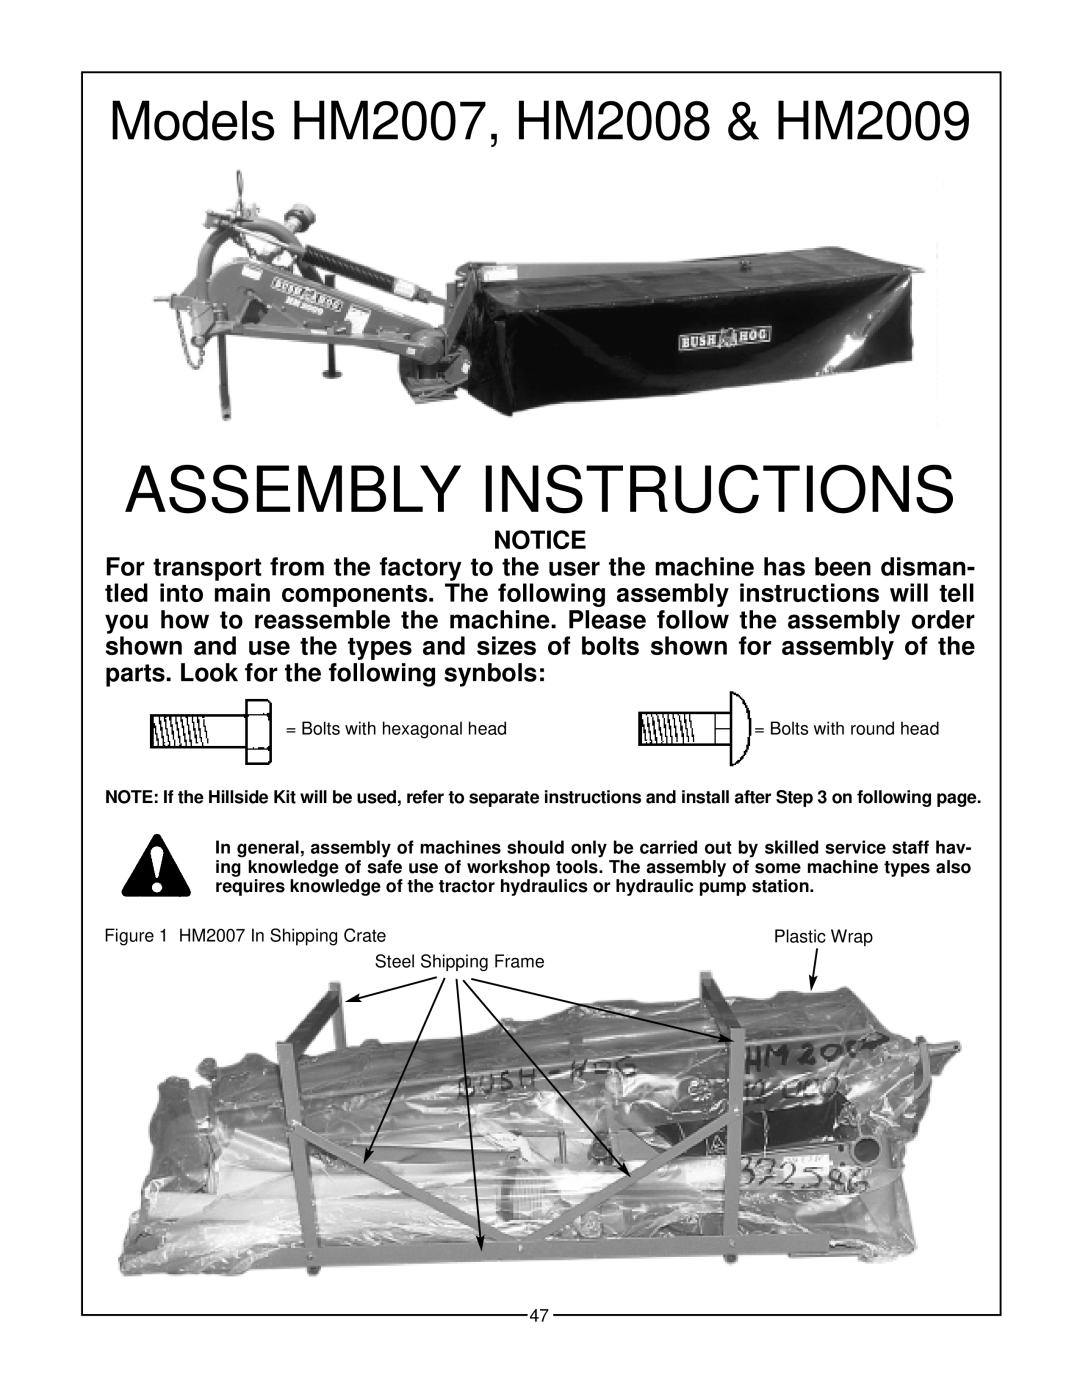 Bush Hog manual Assembly Instructions, Models HM2007, HM2008 & HM2009 